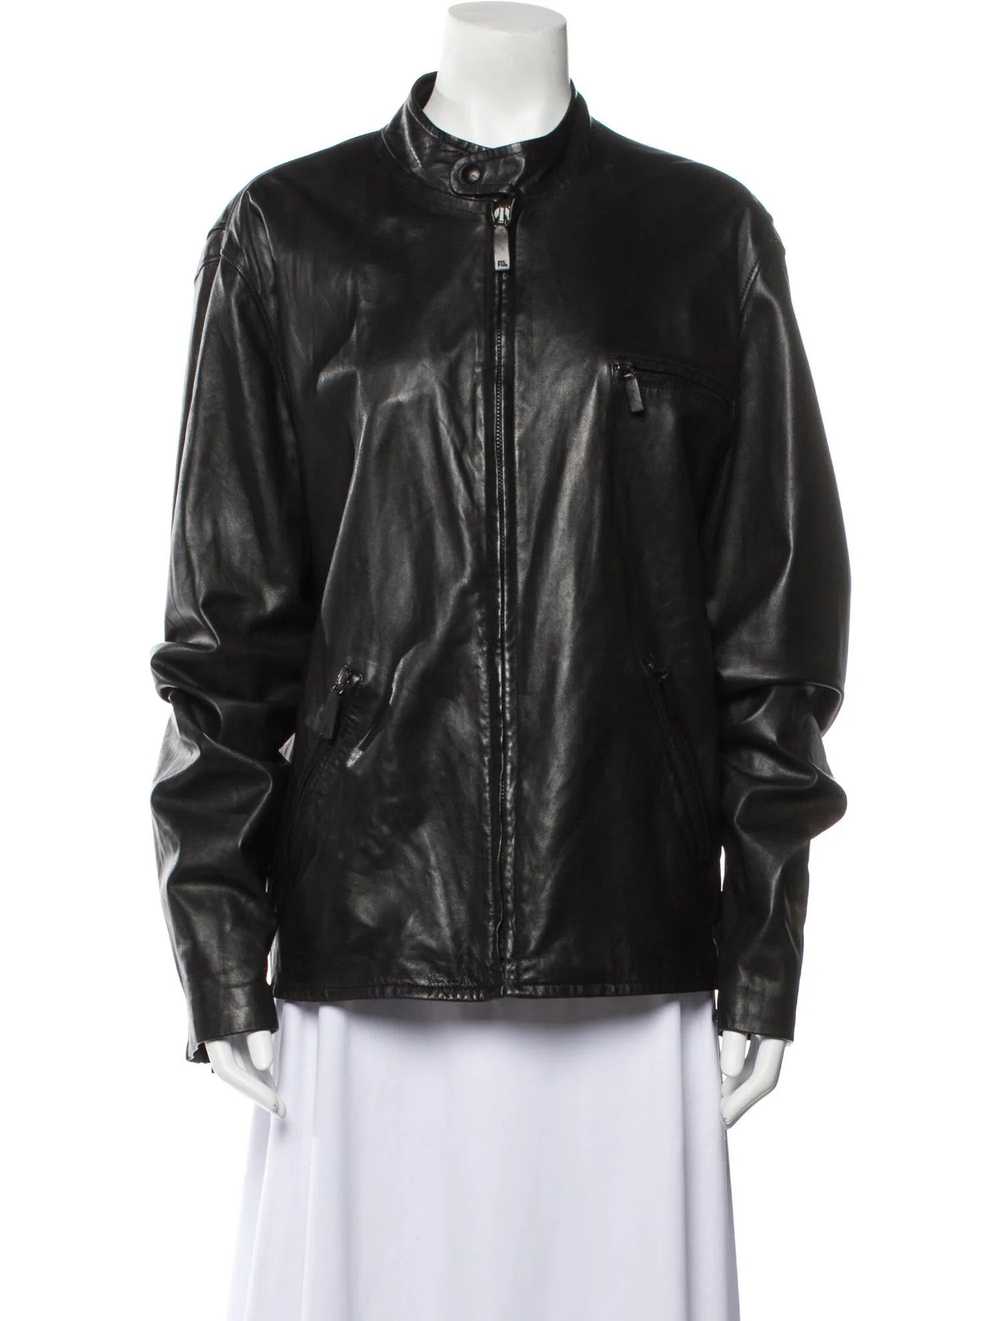 Ralph Lauren Black Label Black Moto Leather Jacket - image 7